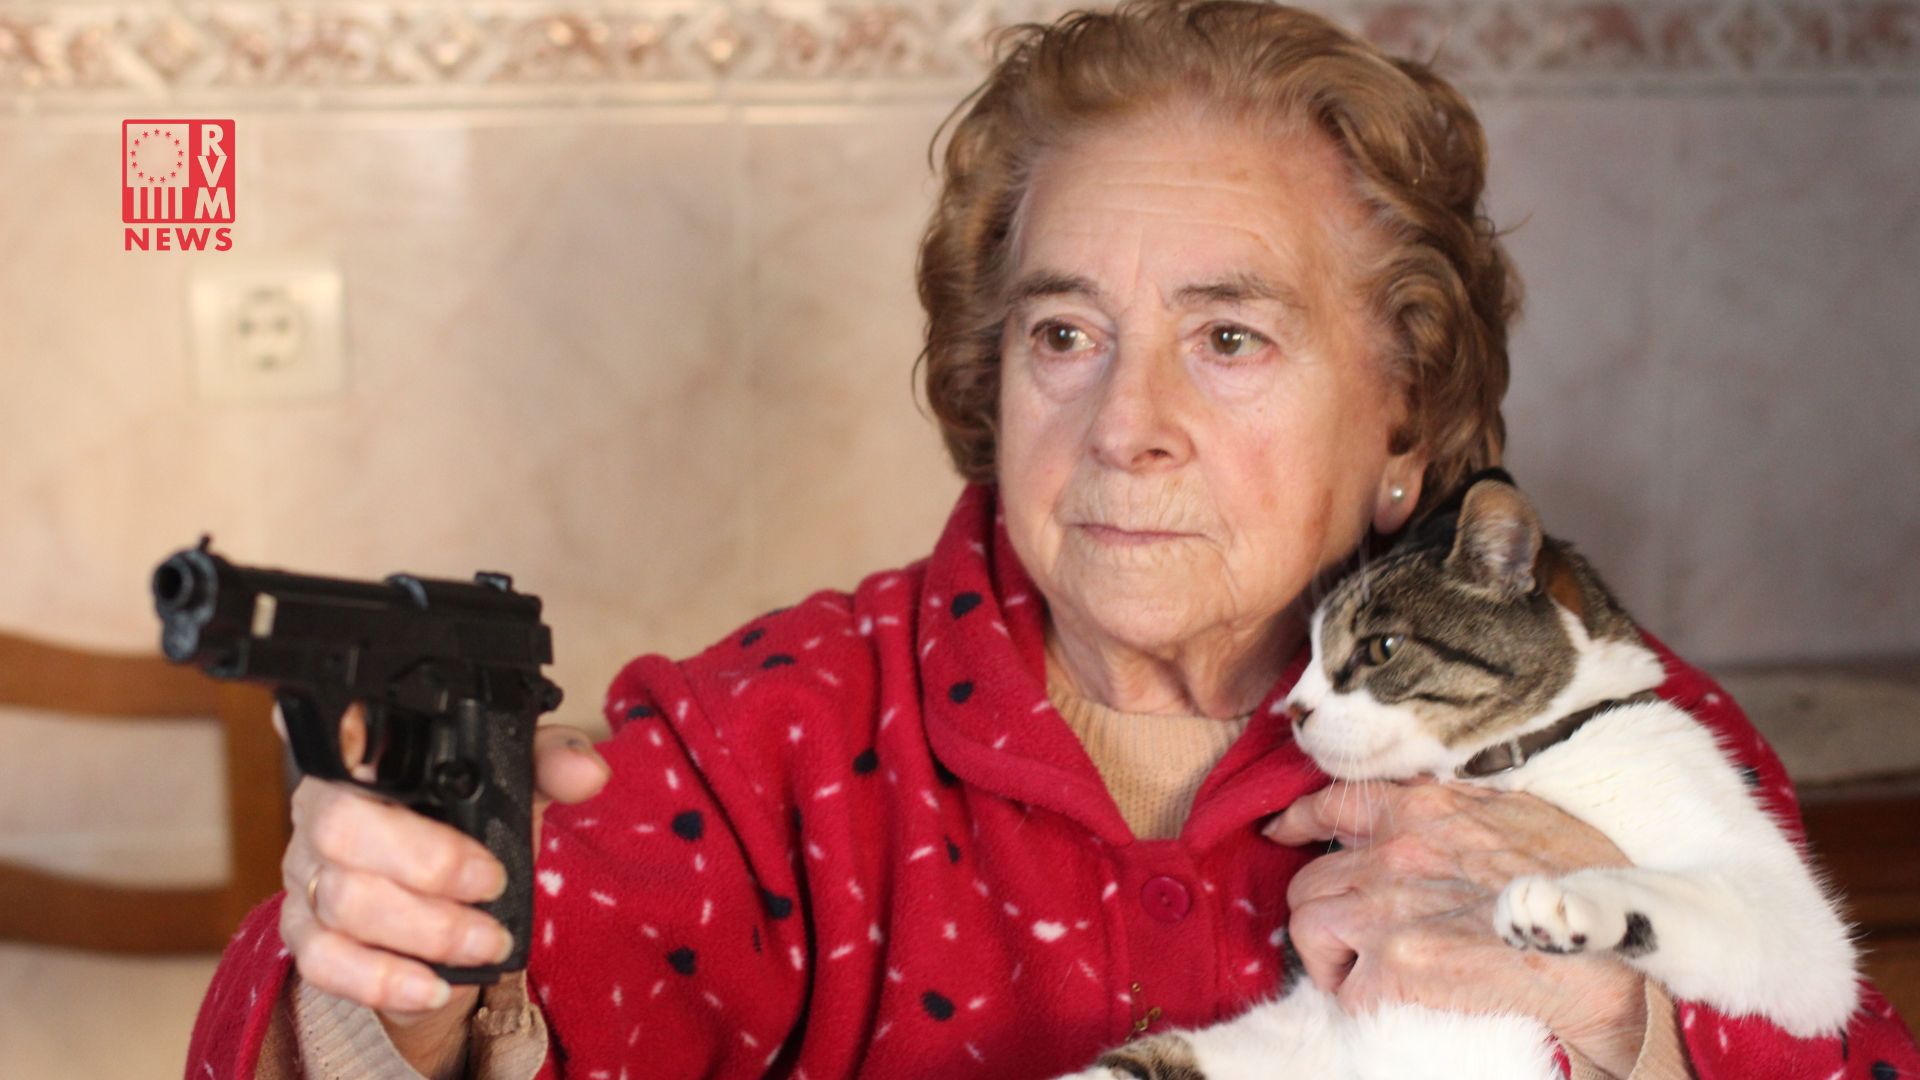 Grandma & Her Gun Save Grandchild From Runaway Criminal Home Invader [VIDEO]